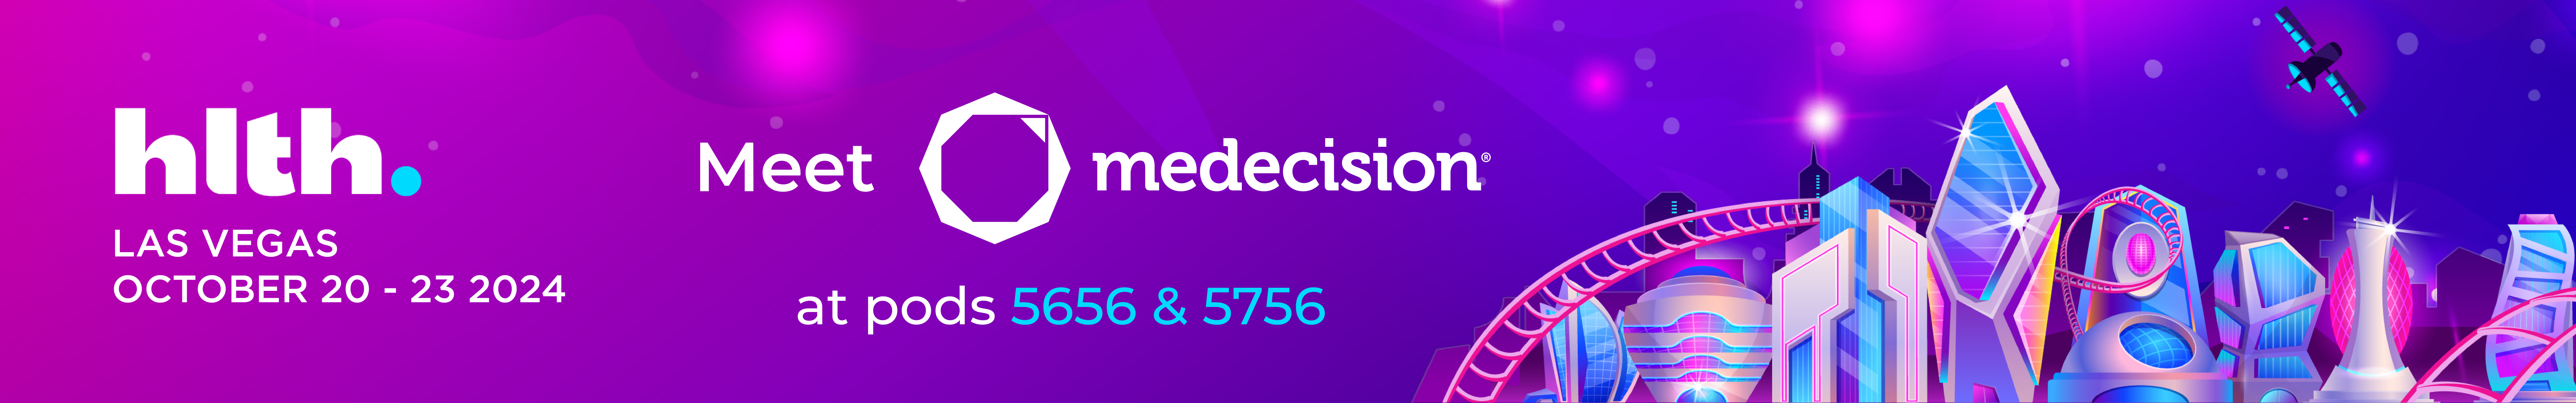 Meet Medecision at HLTH 2024 at pods 5656 & 5756